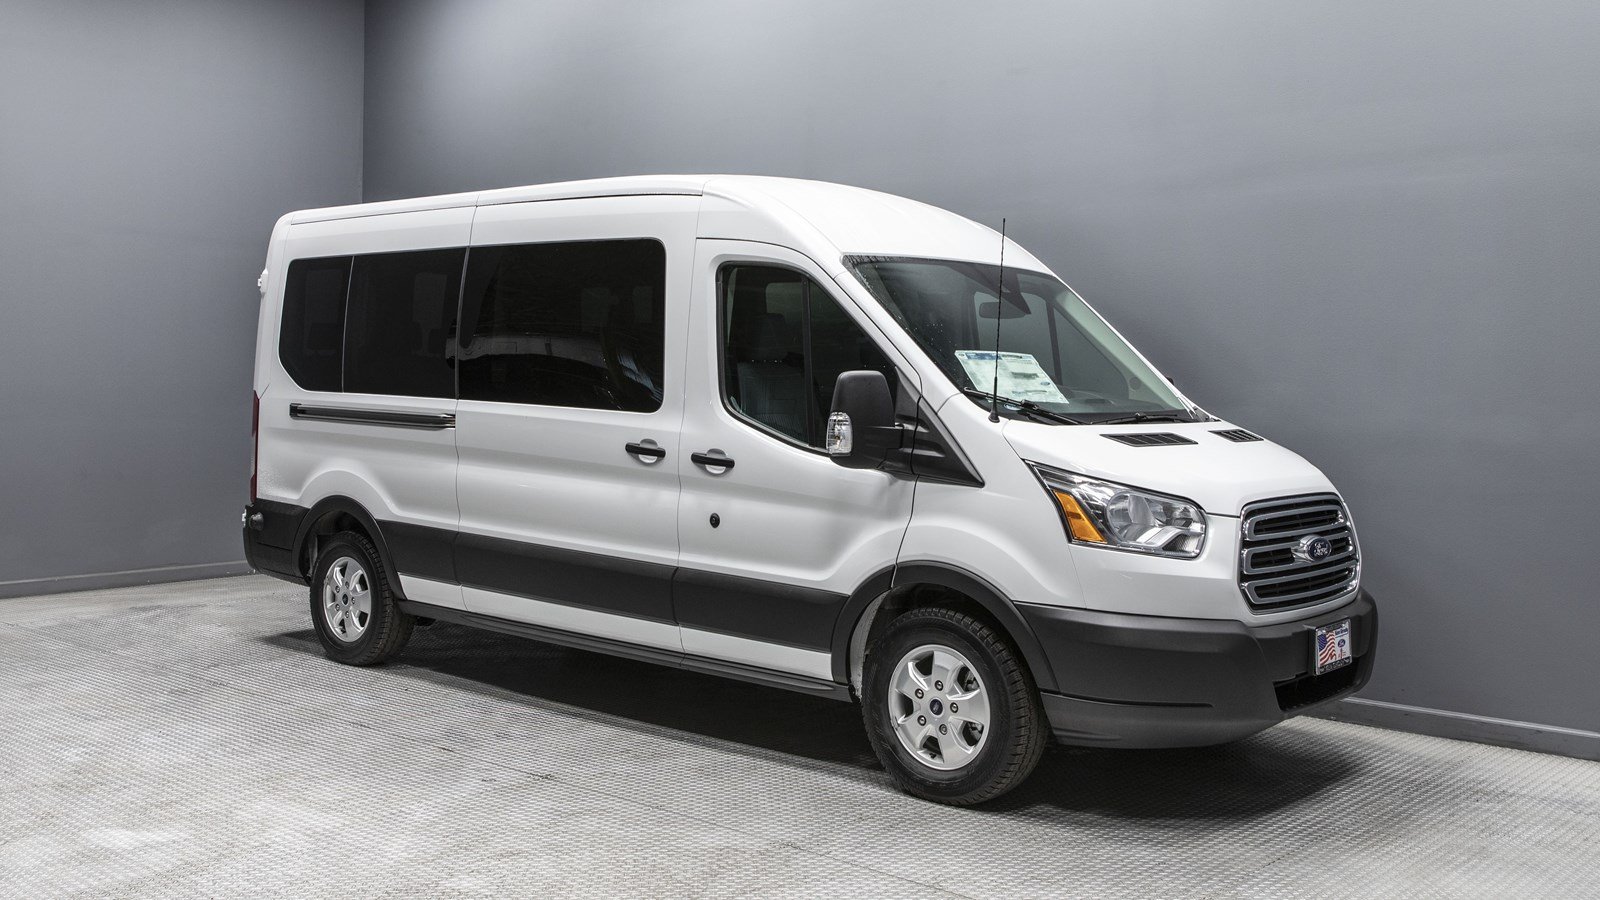 New 2019 Ford Transit Passenger Wagon XL Fullsize